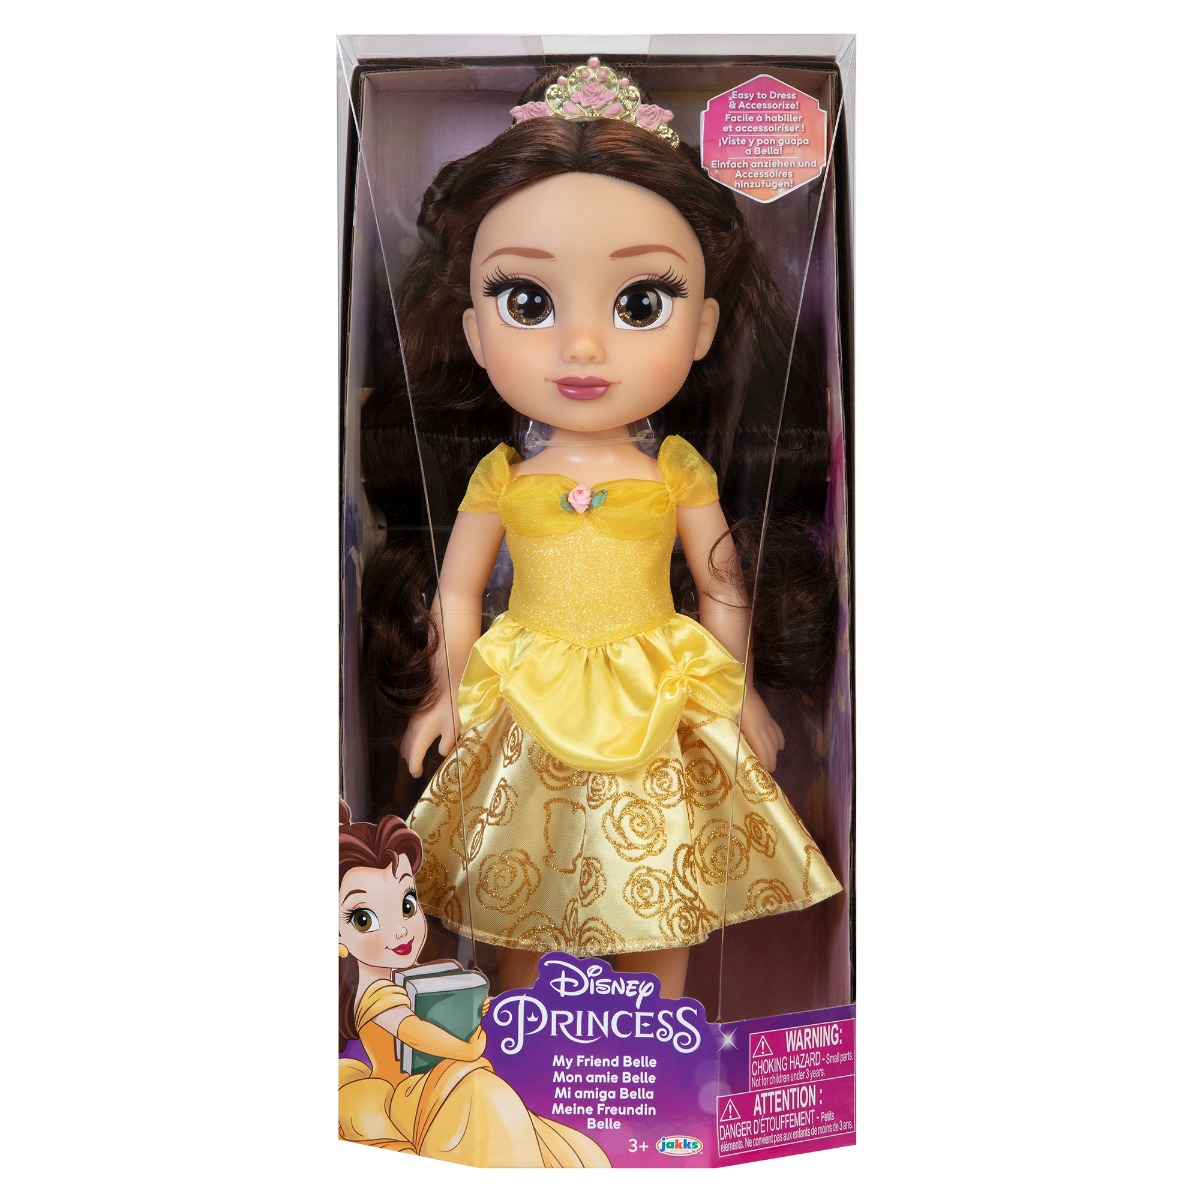 Disney princess papusa 38 cm belle bekid.ro